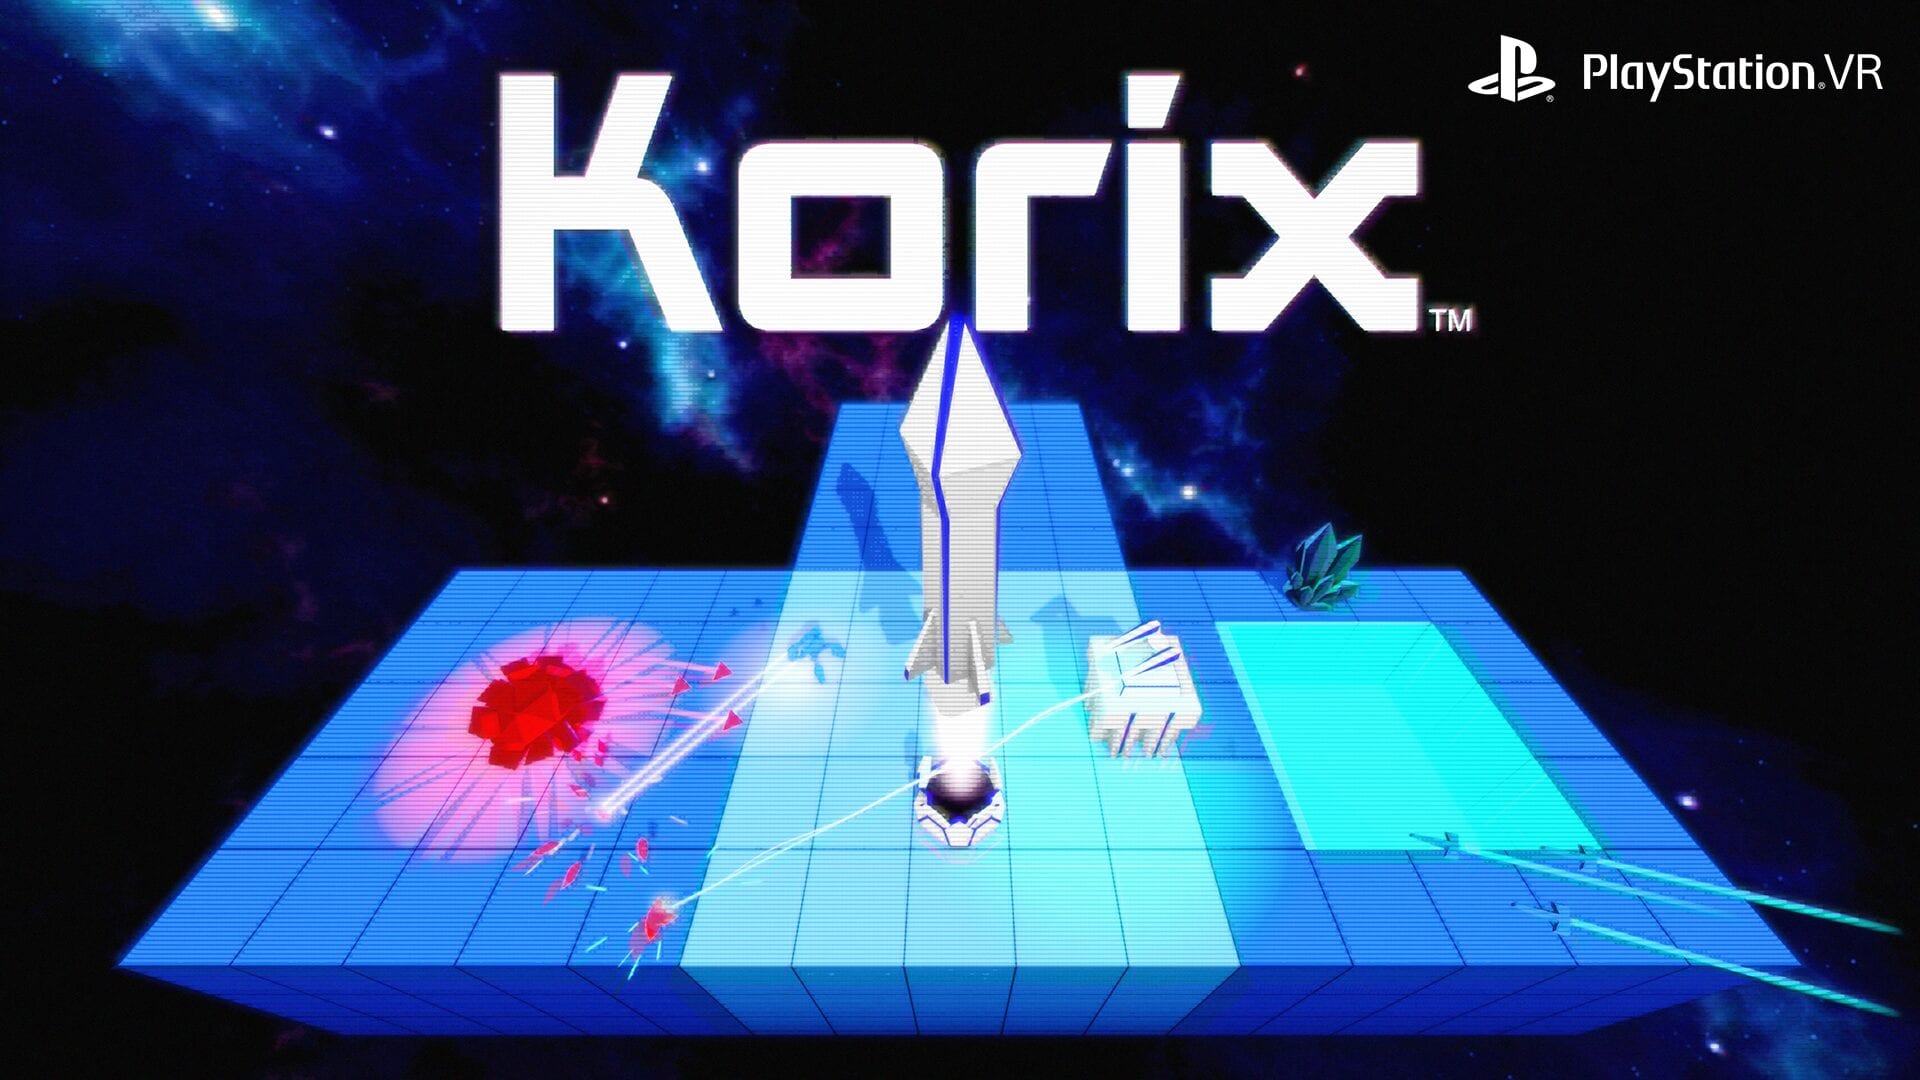 Review: Korix - PS4/PSVR